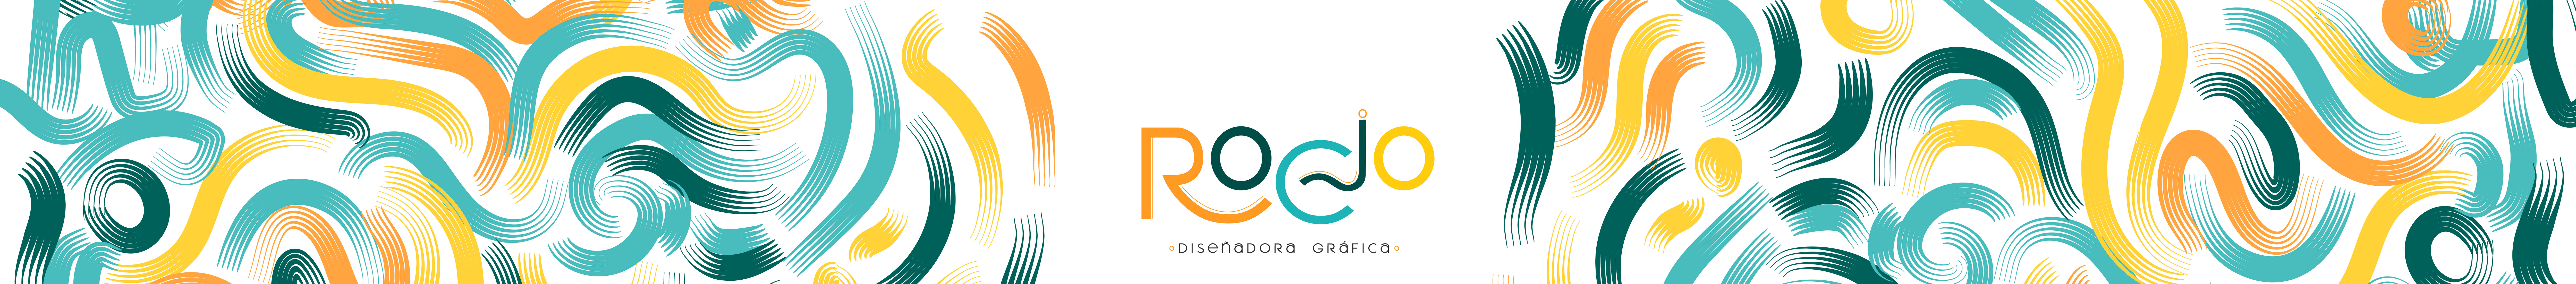 Rocio Rodriguez Q's profile banner